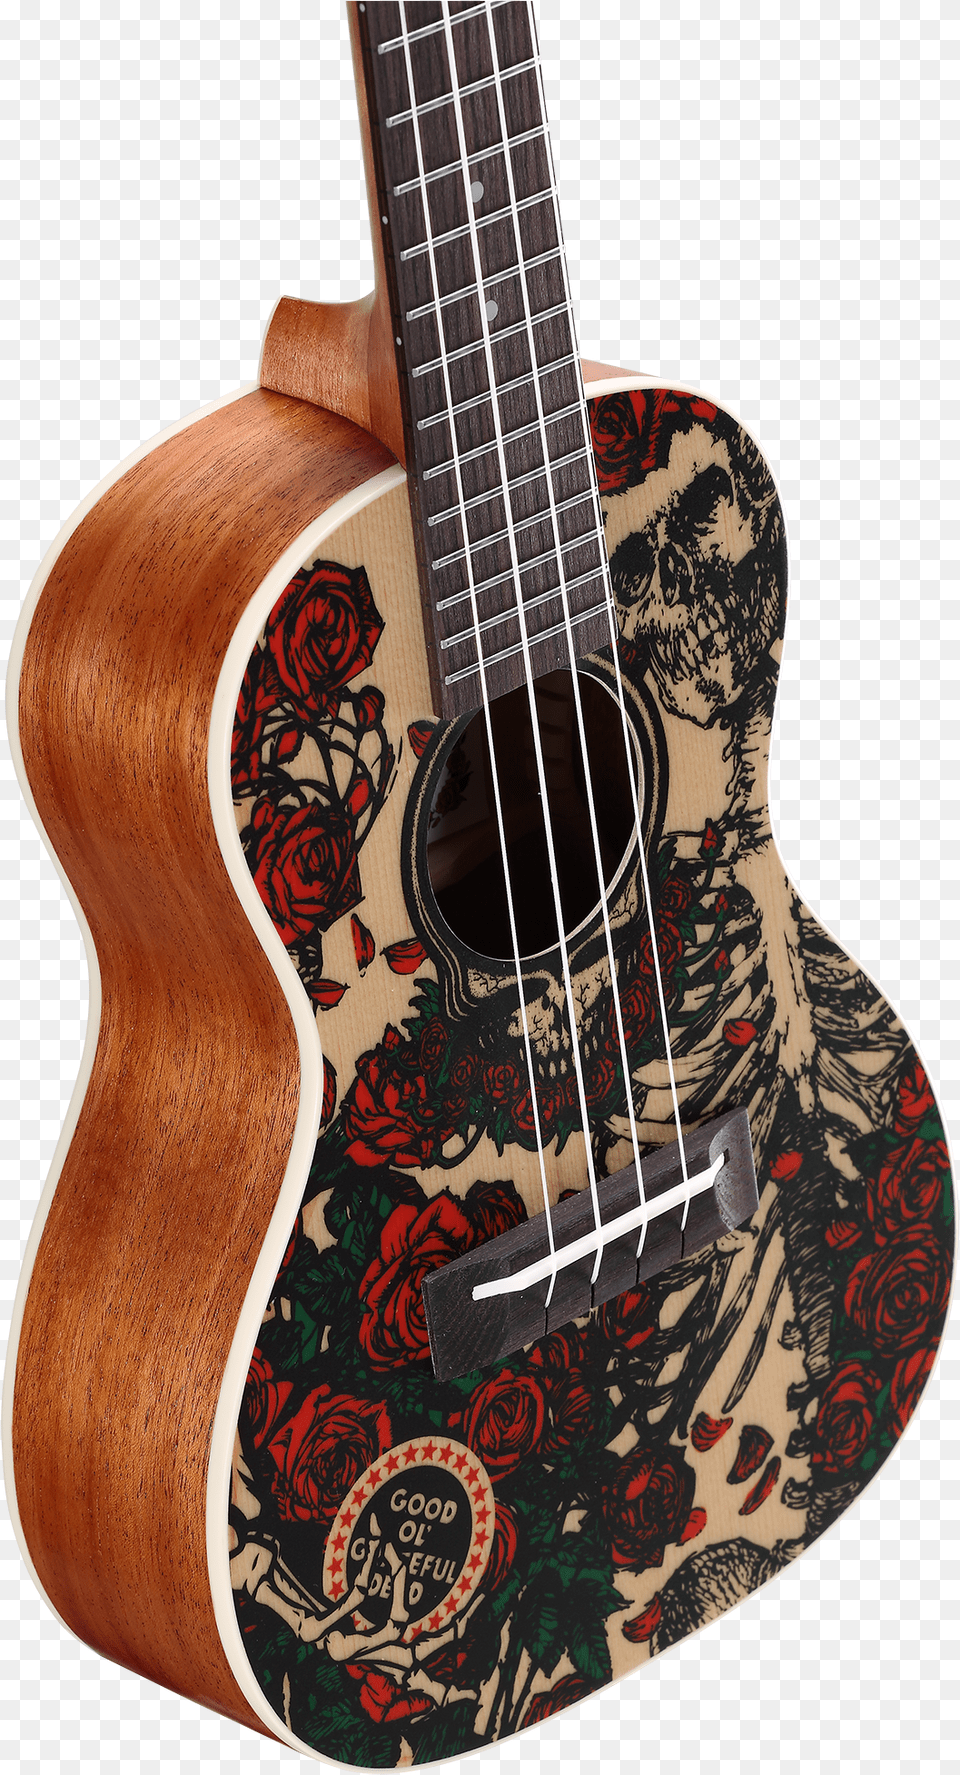 Alvarez Grateful Dead Ukulele Roses, Bass Guitar, Guitar, Musical Instrument Png Image